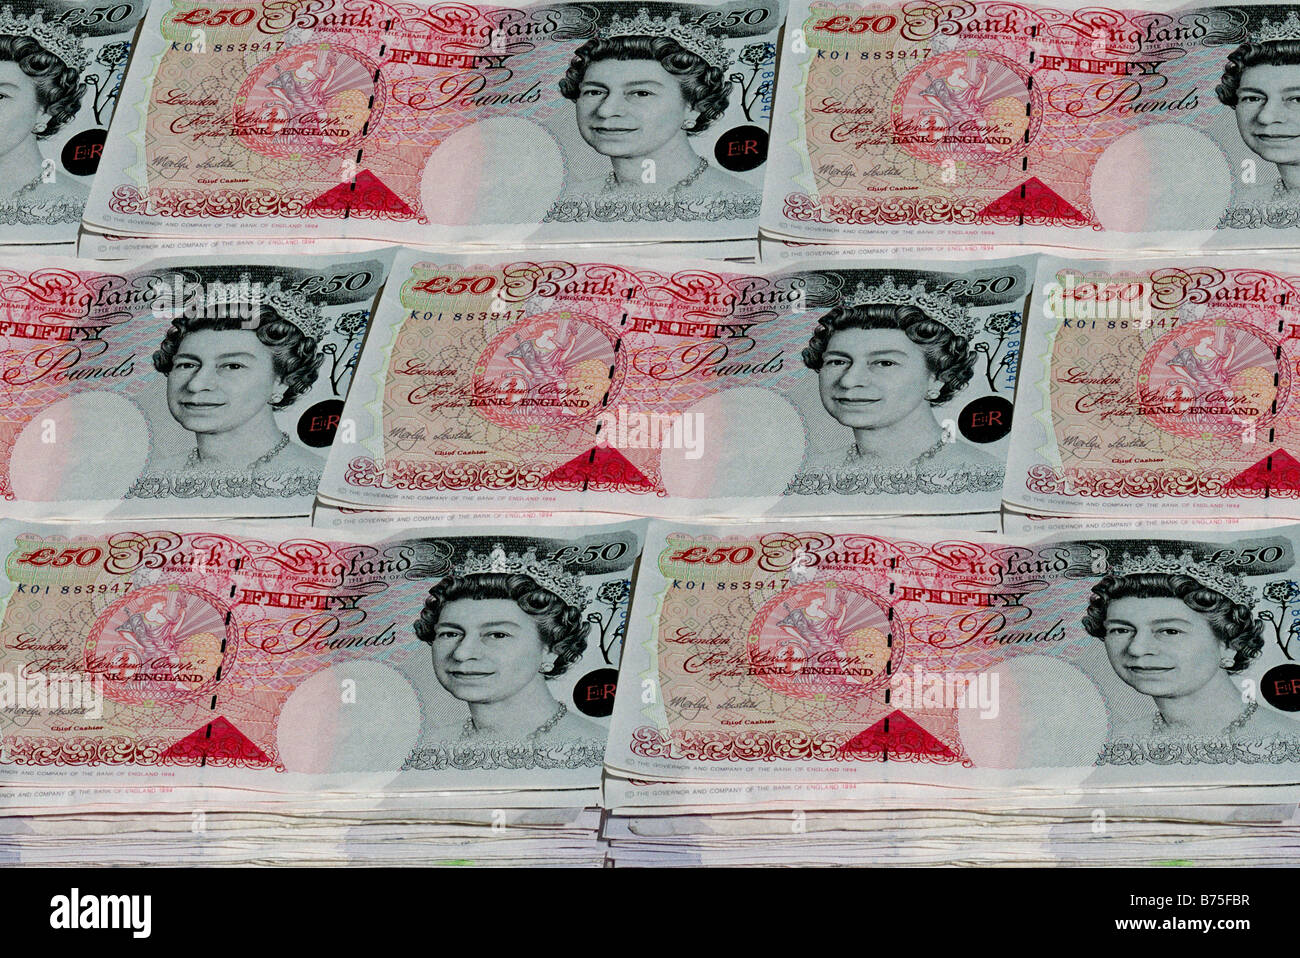 Des tas de billets de banque britannique. Banque D'Images